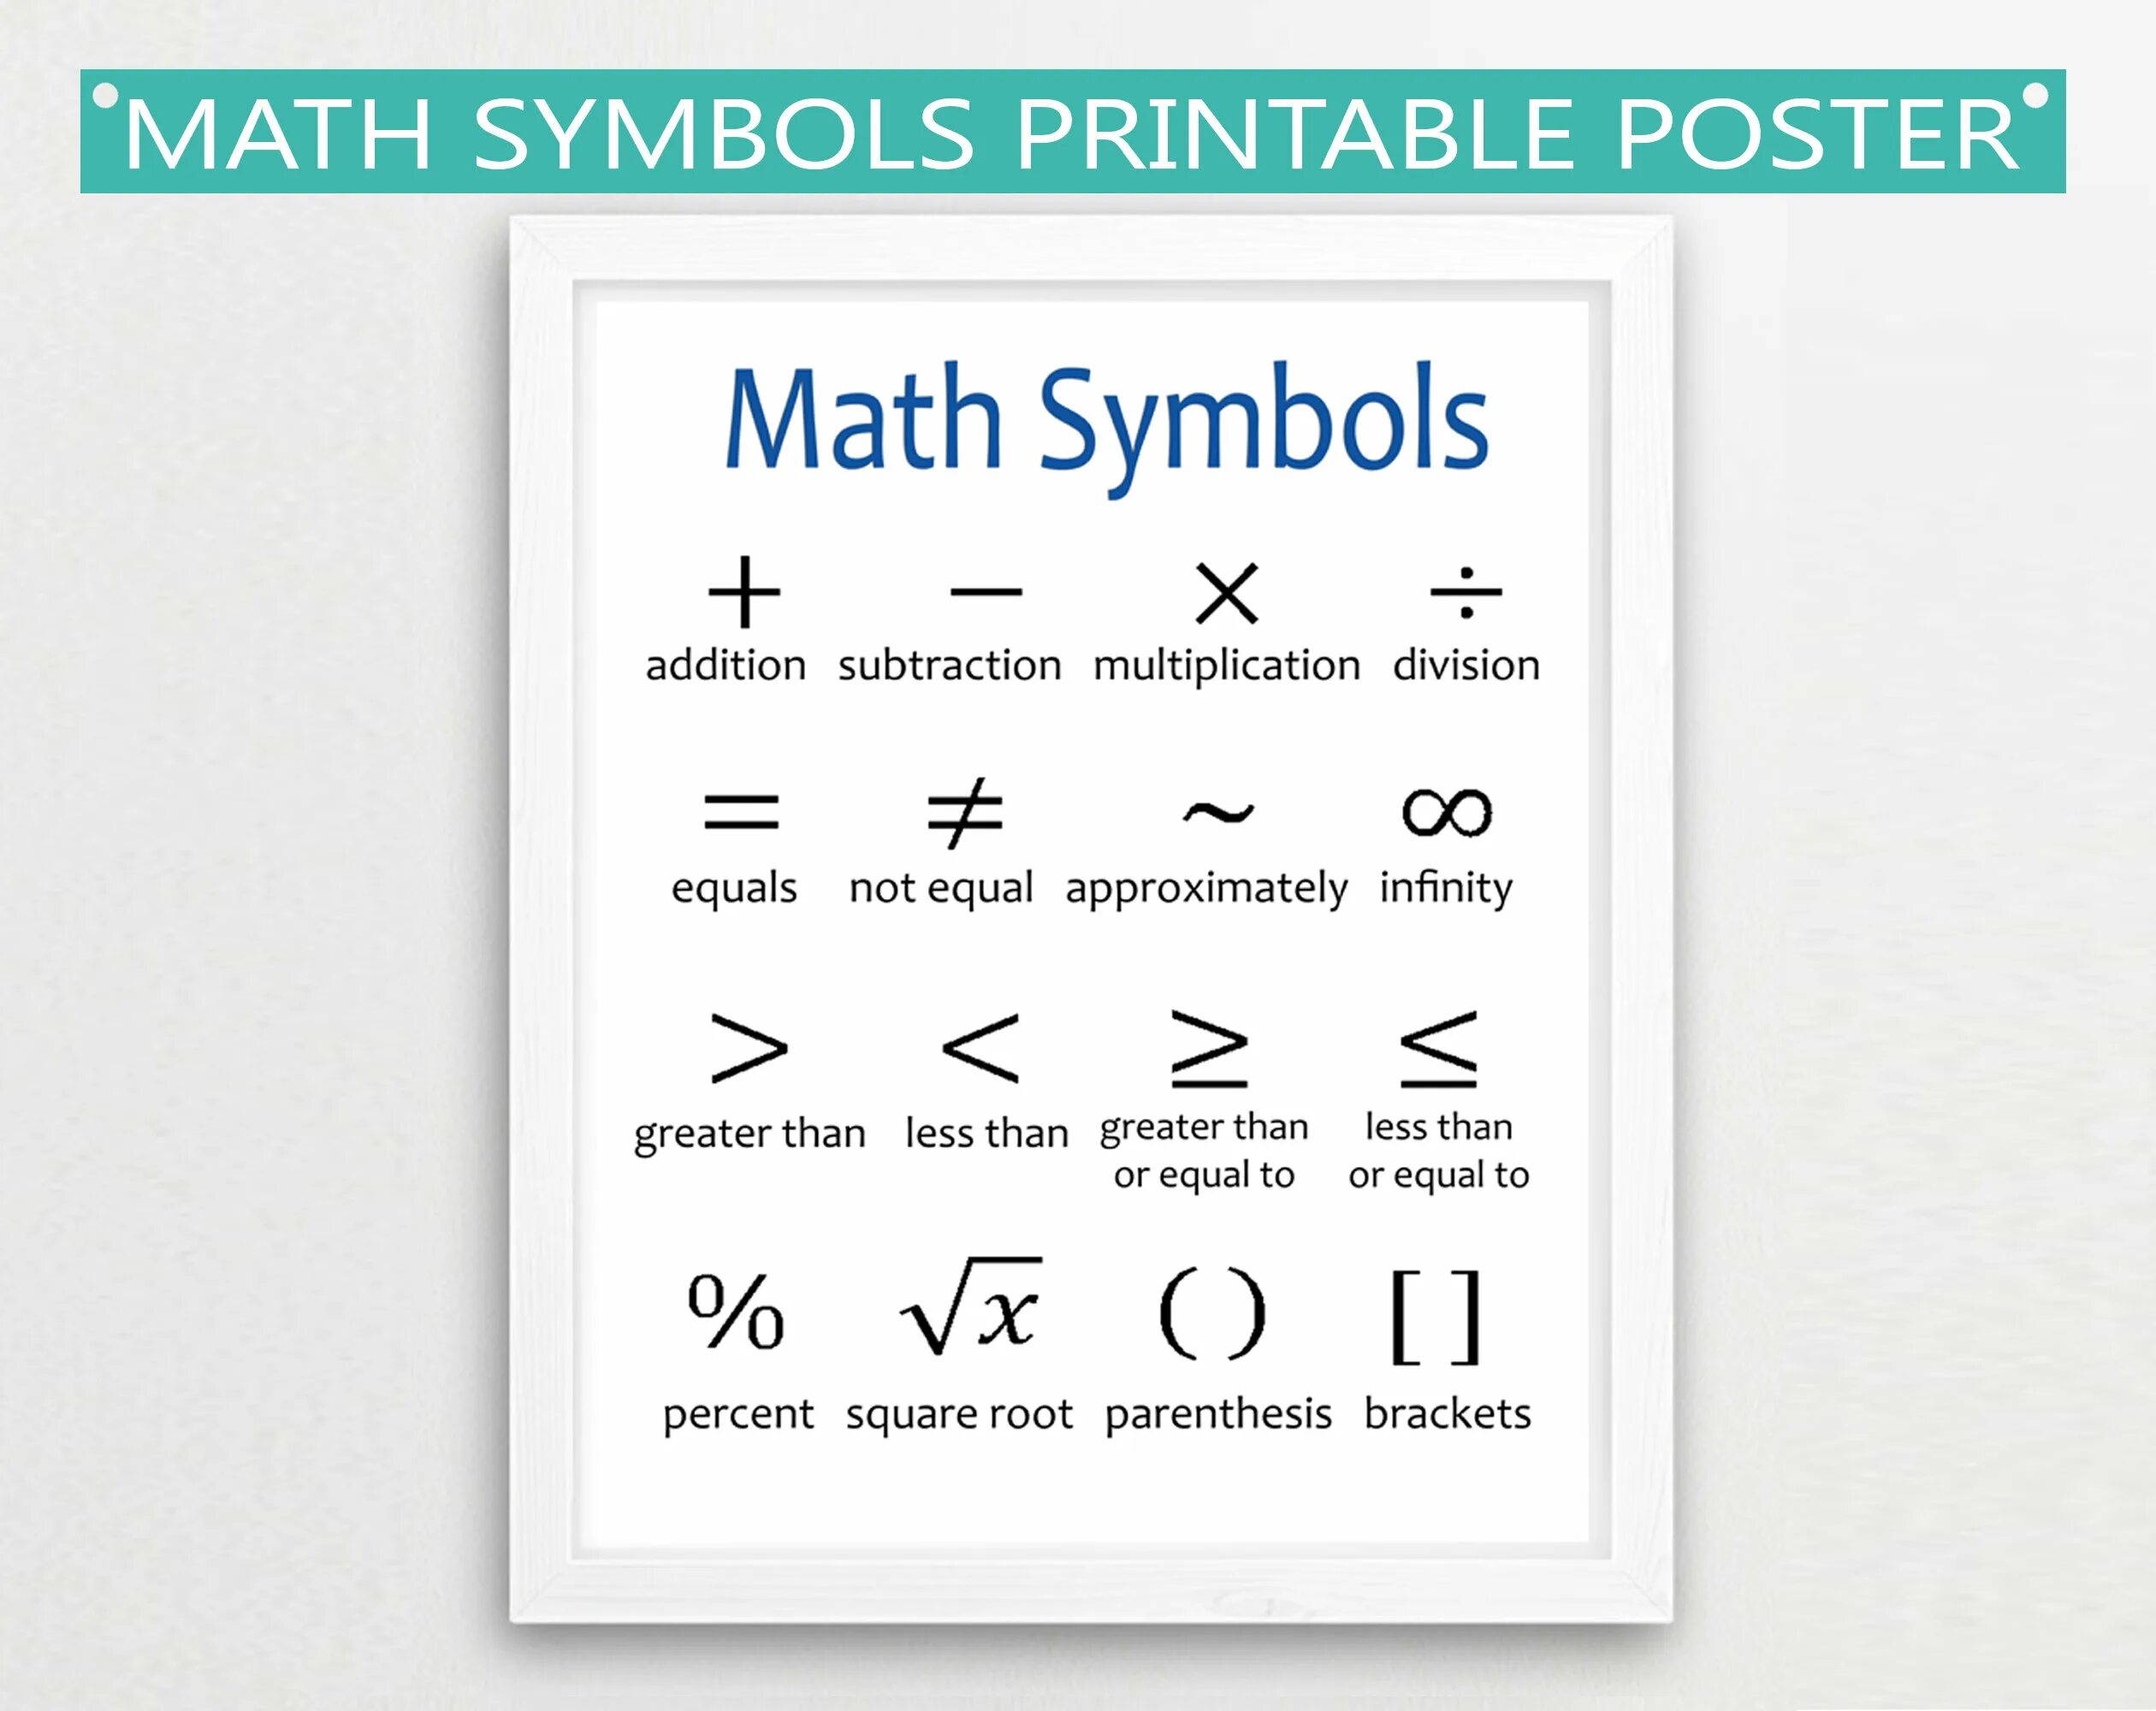 Math symbols. Язык математики символы. Mathematical symbols. Математические знаки на анг. Математические символы на английском.